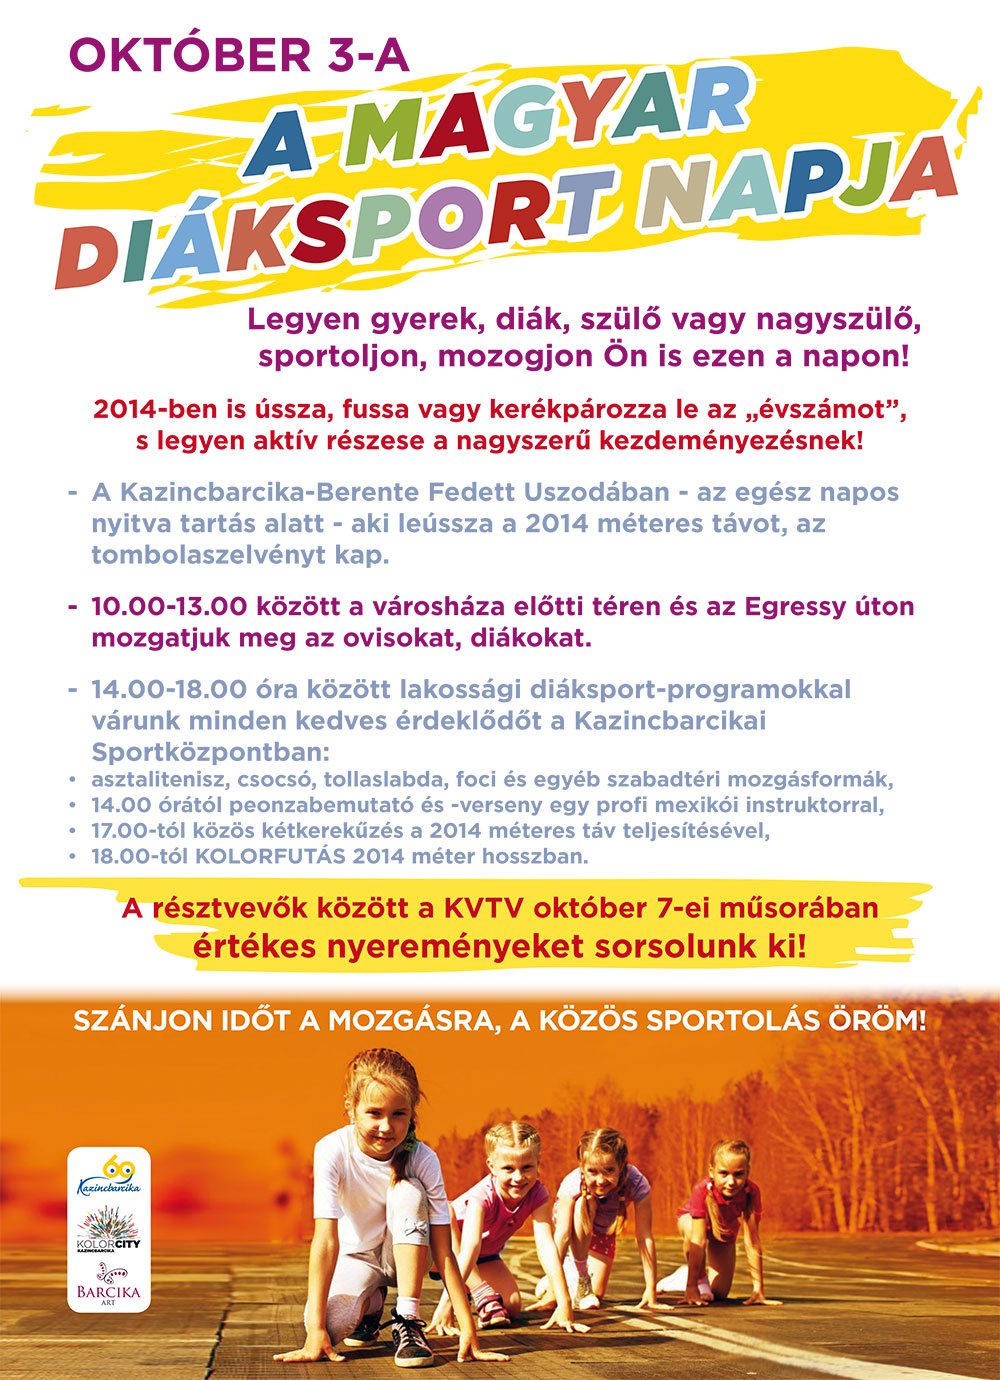 A Magyar Diáksport Napja